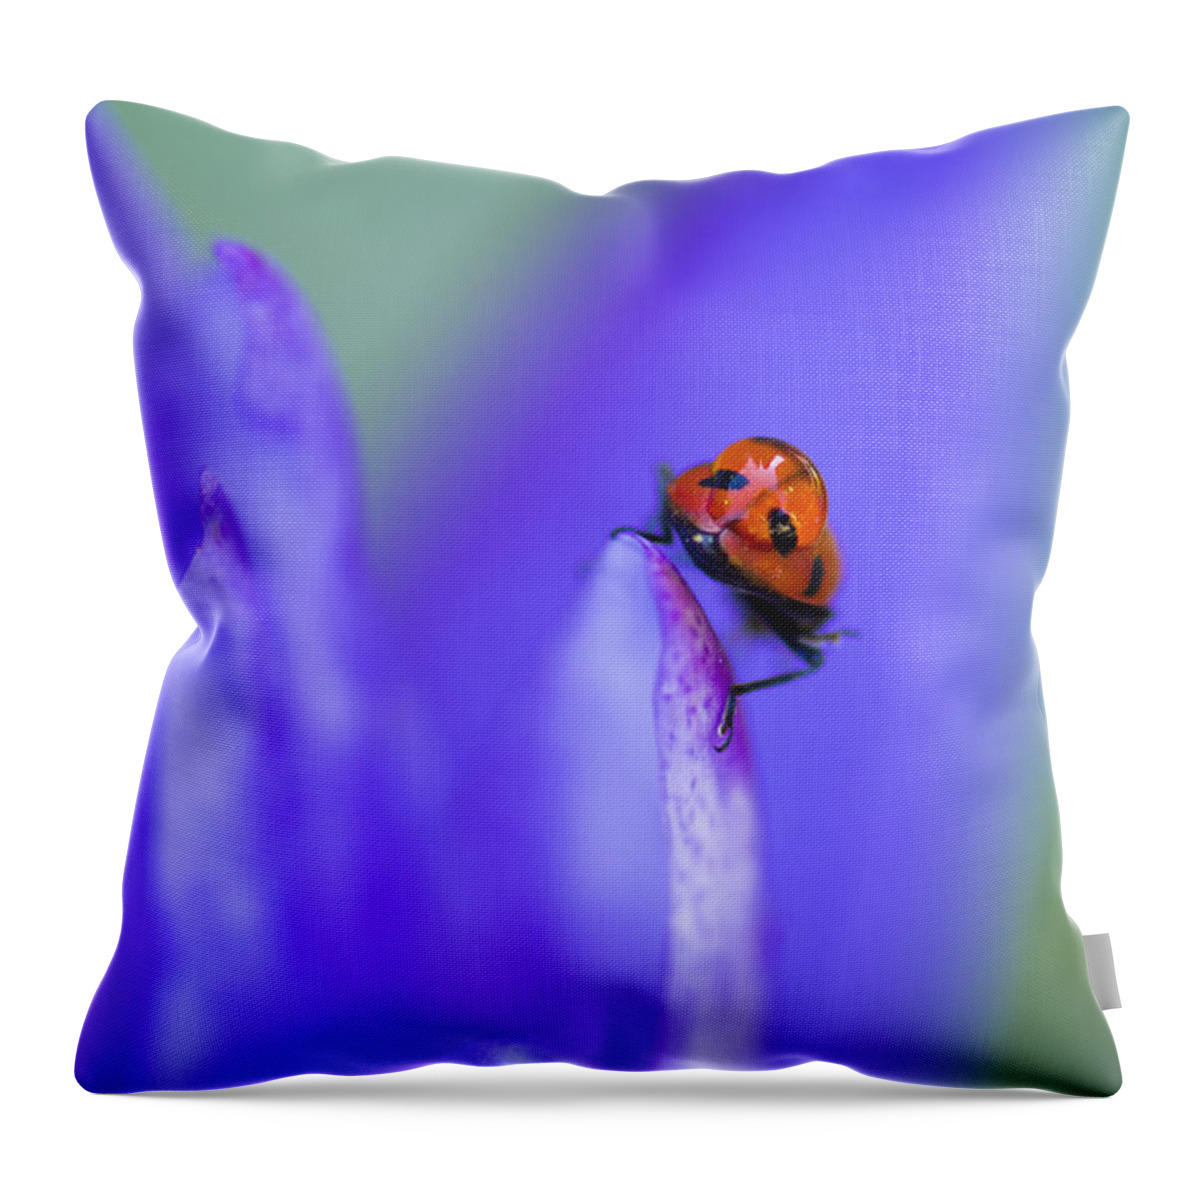 Ladybug Throw Pillow featuring the photograph Ladybug Adventure by Priya Ghose